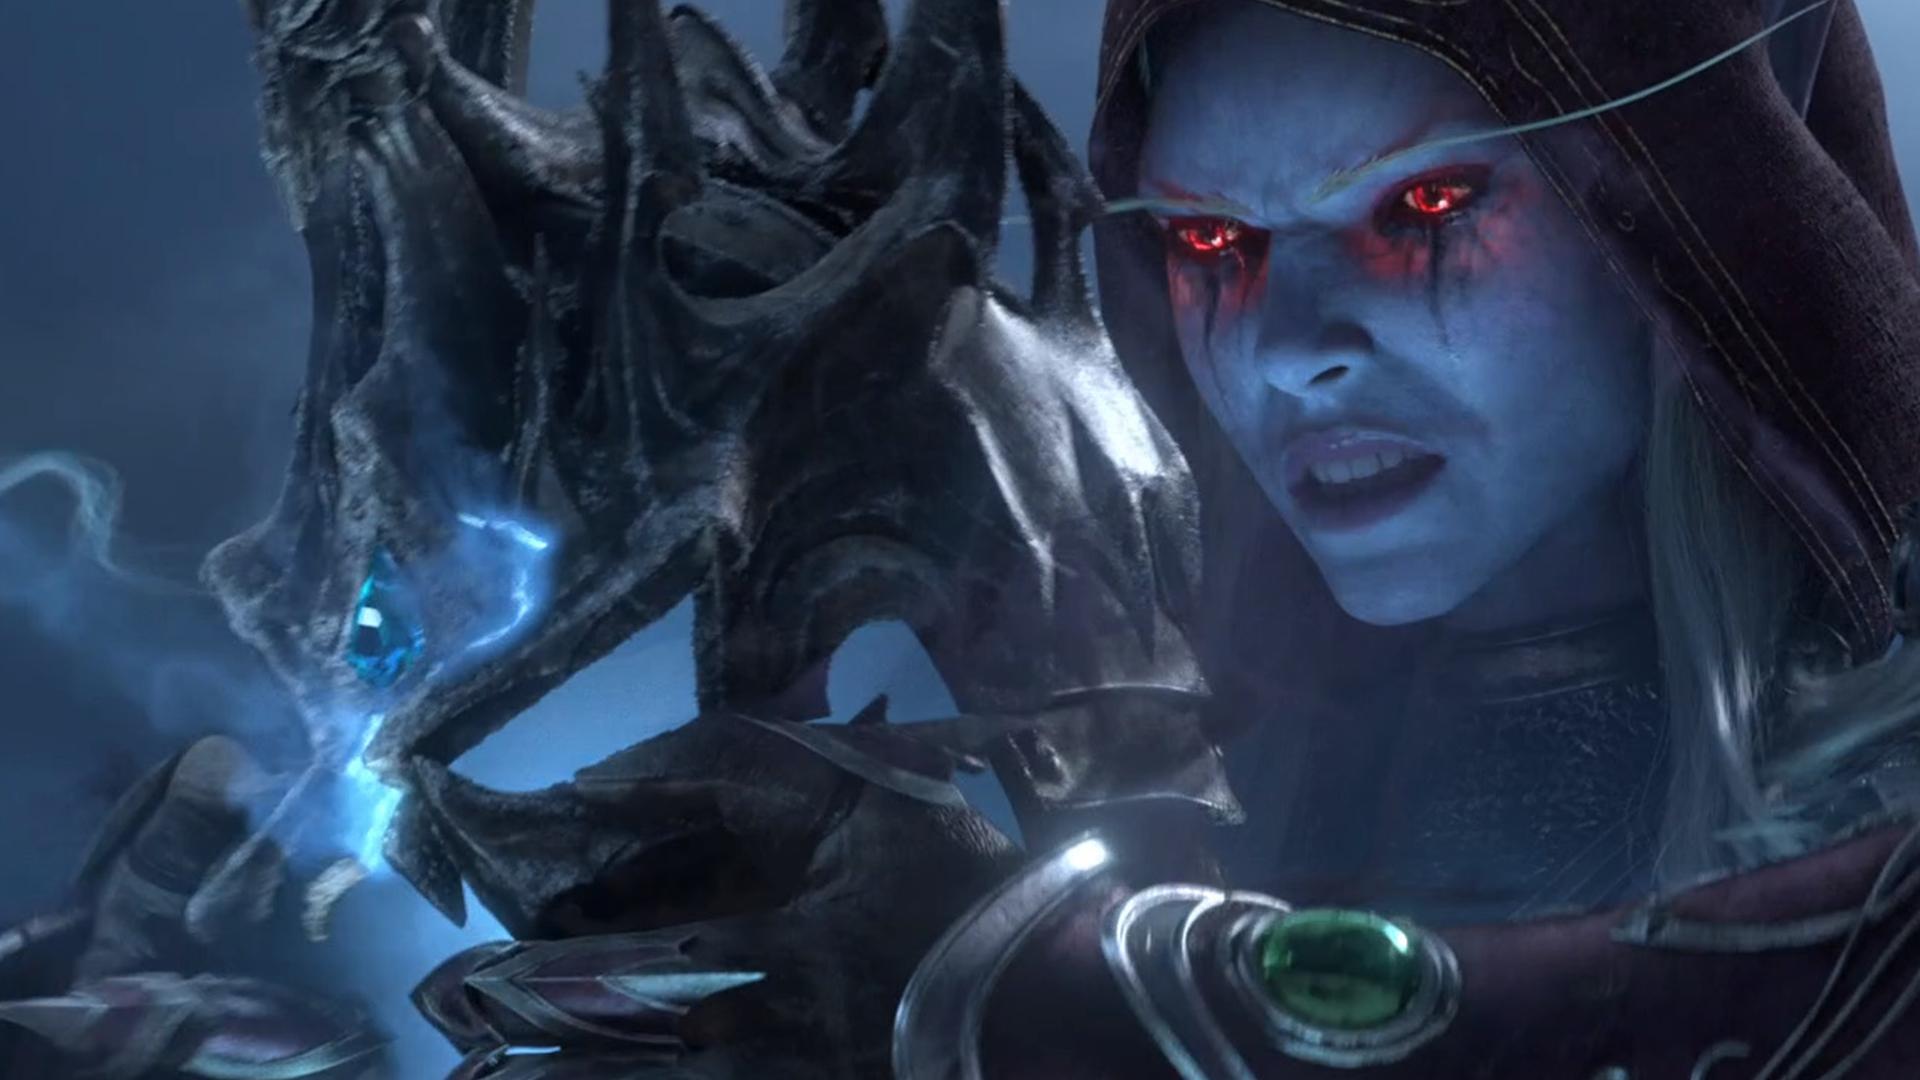 World of Warcraft: Shadowlands feels like Battle for Azeroth